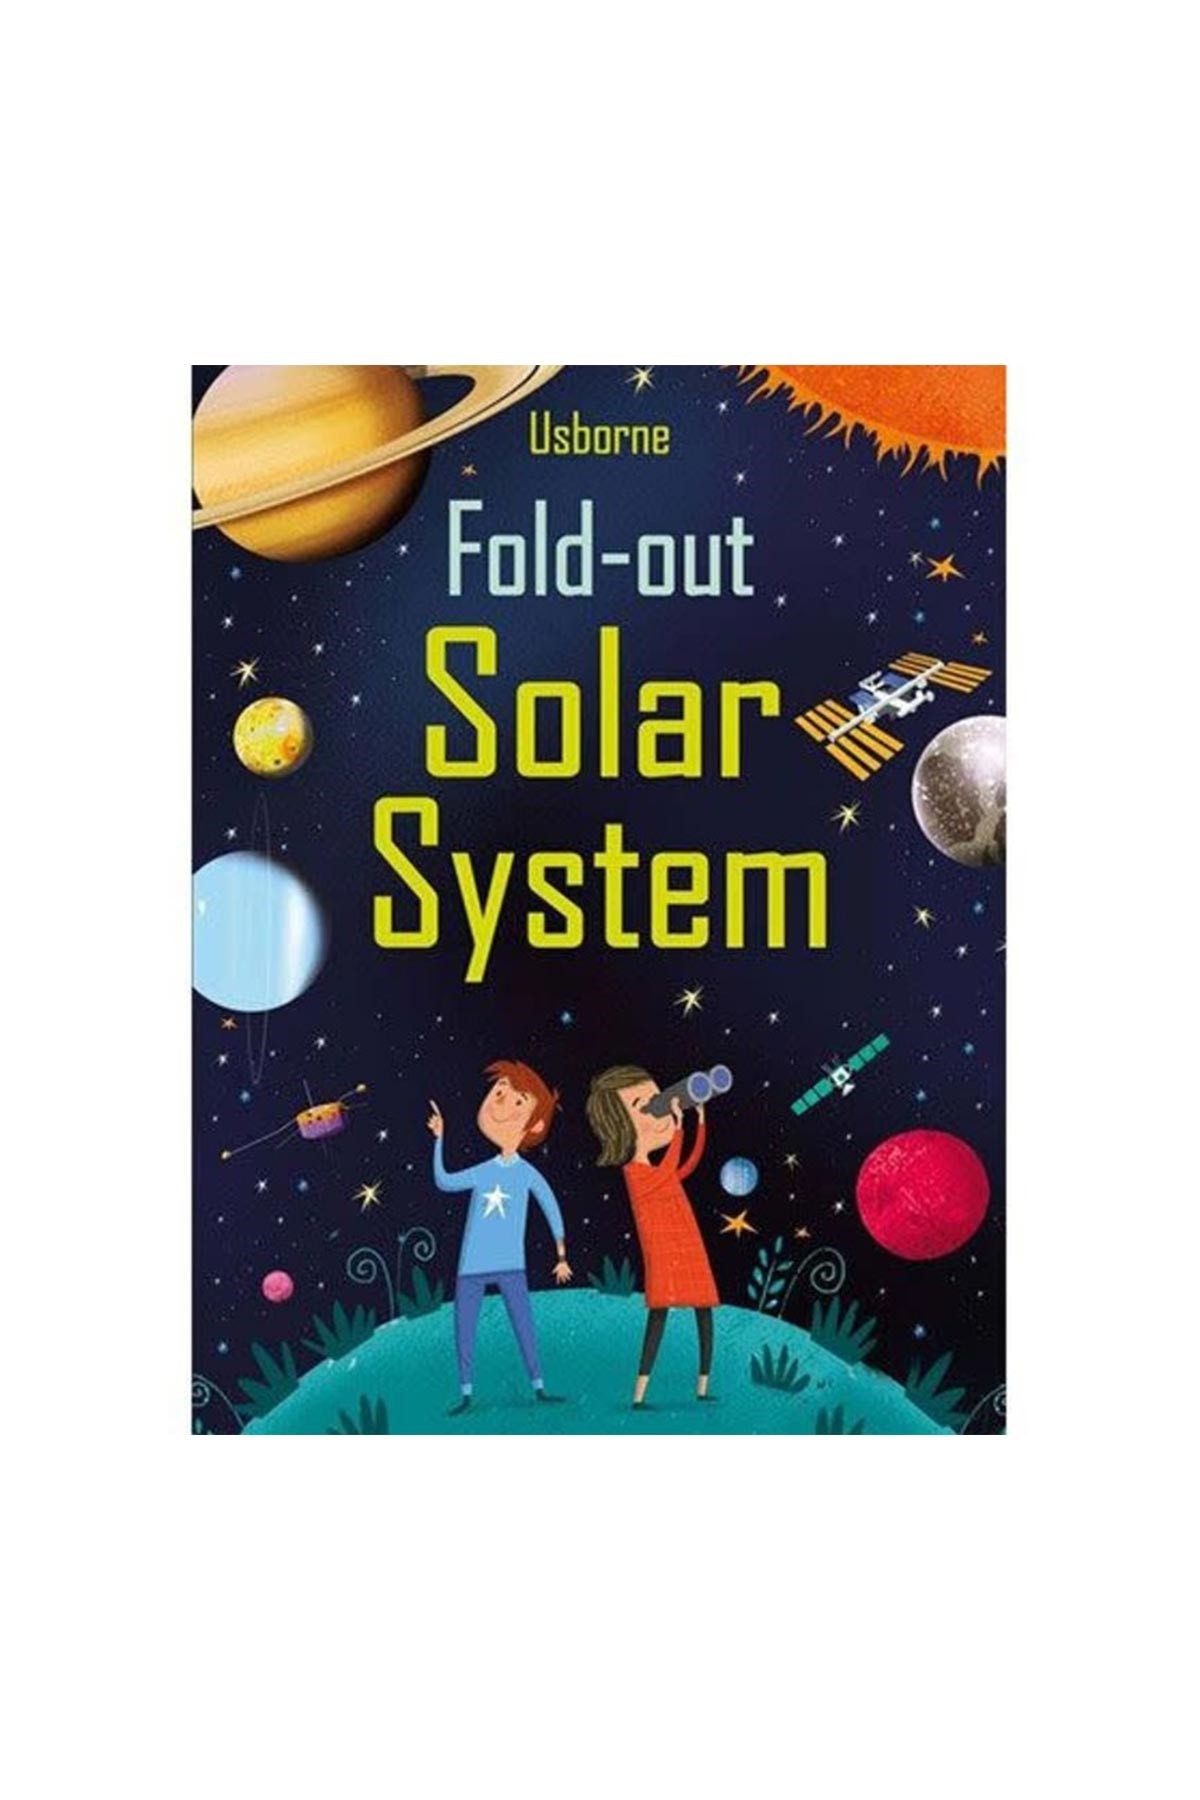 The Usborne Fold Out Solar System